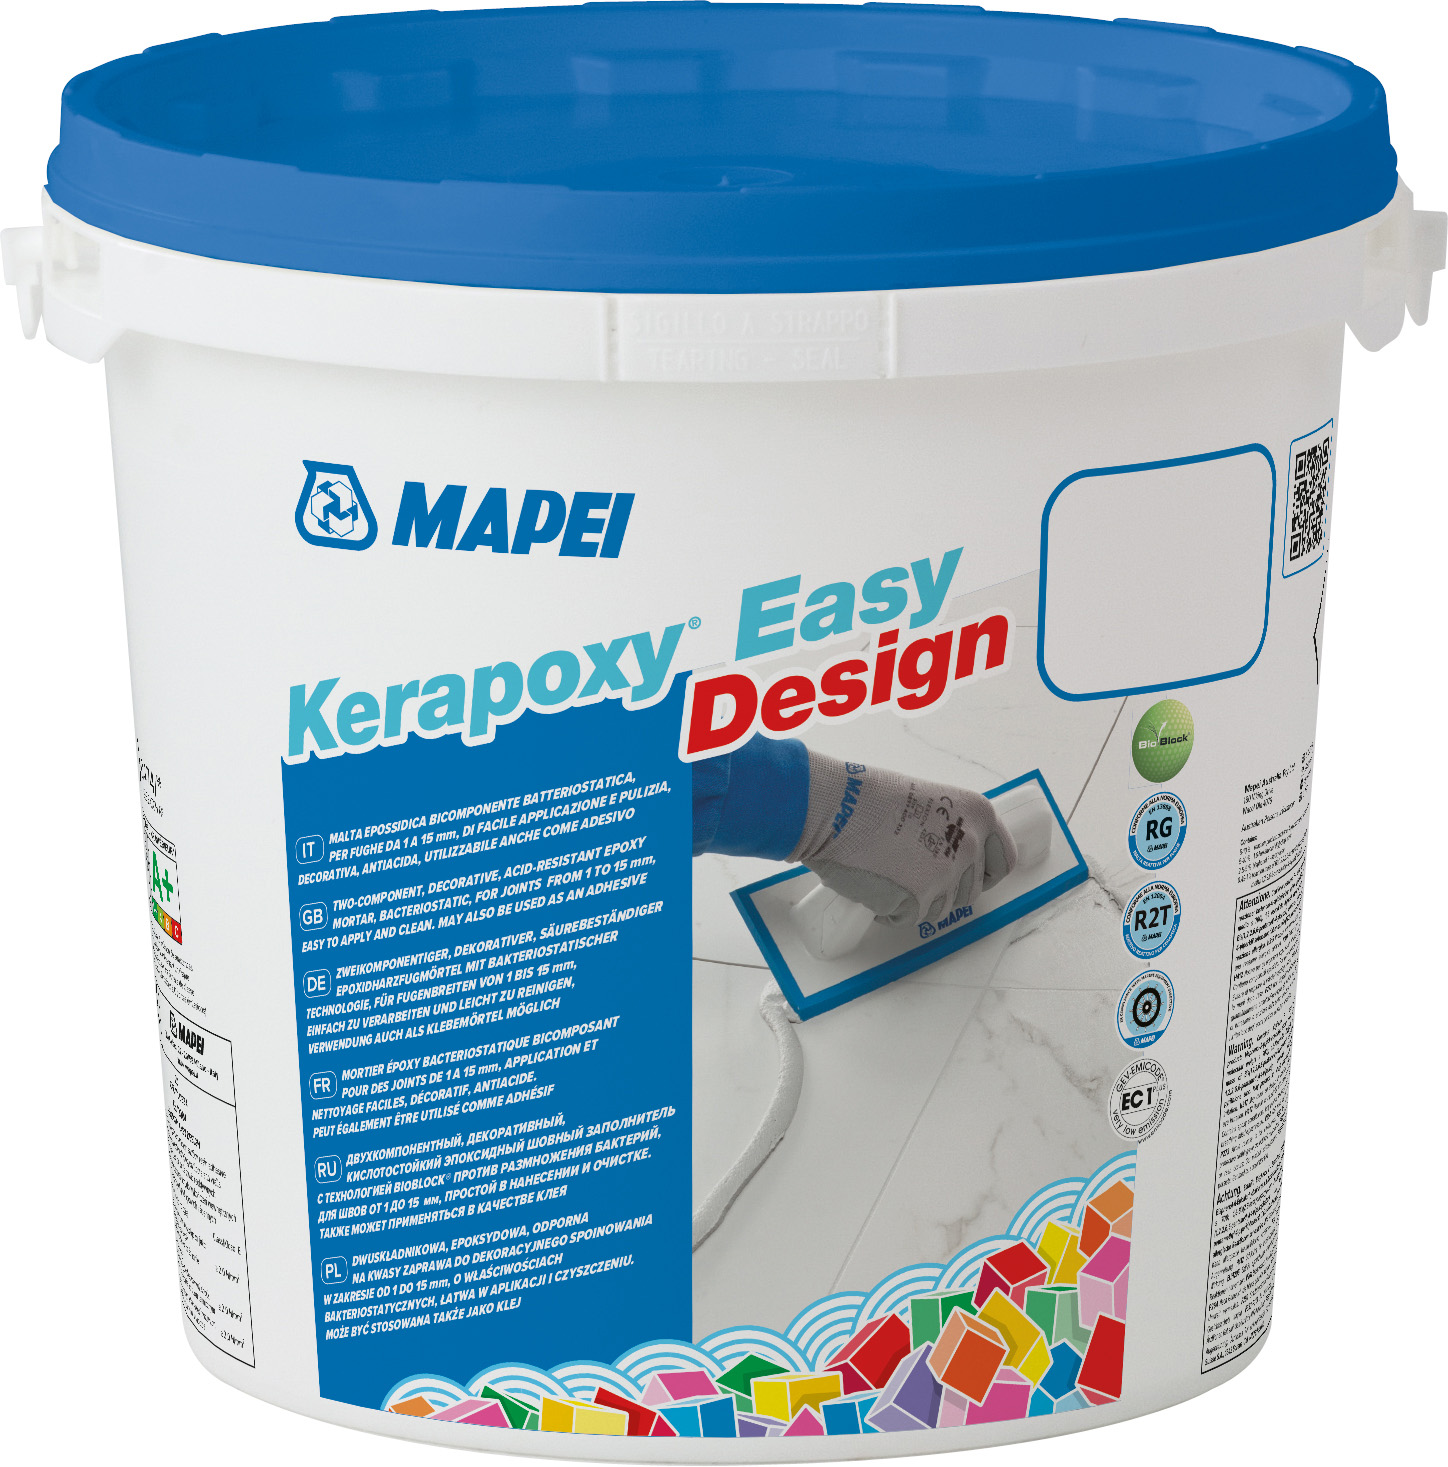 Mapei_Kerapoxy Easy Design 3kg Gallery1